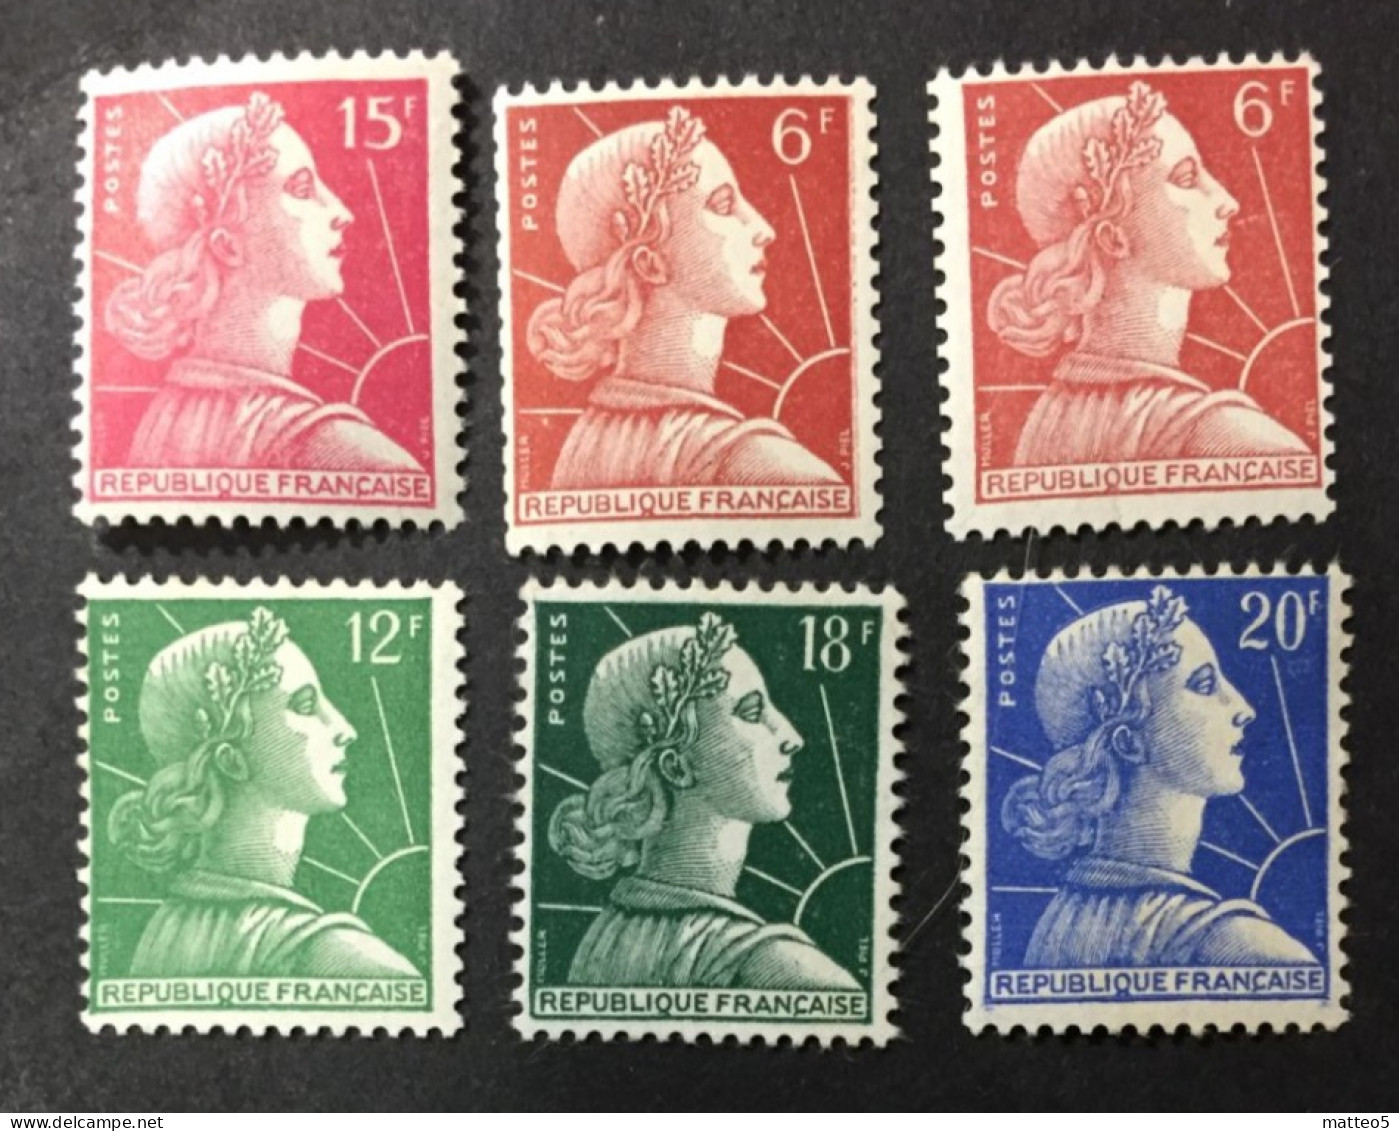 1955 /59  France - Liberty - Marianne De Muller - 6  Stamps Unused - 1955-1961 Marianne Van Muller